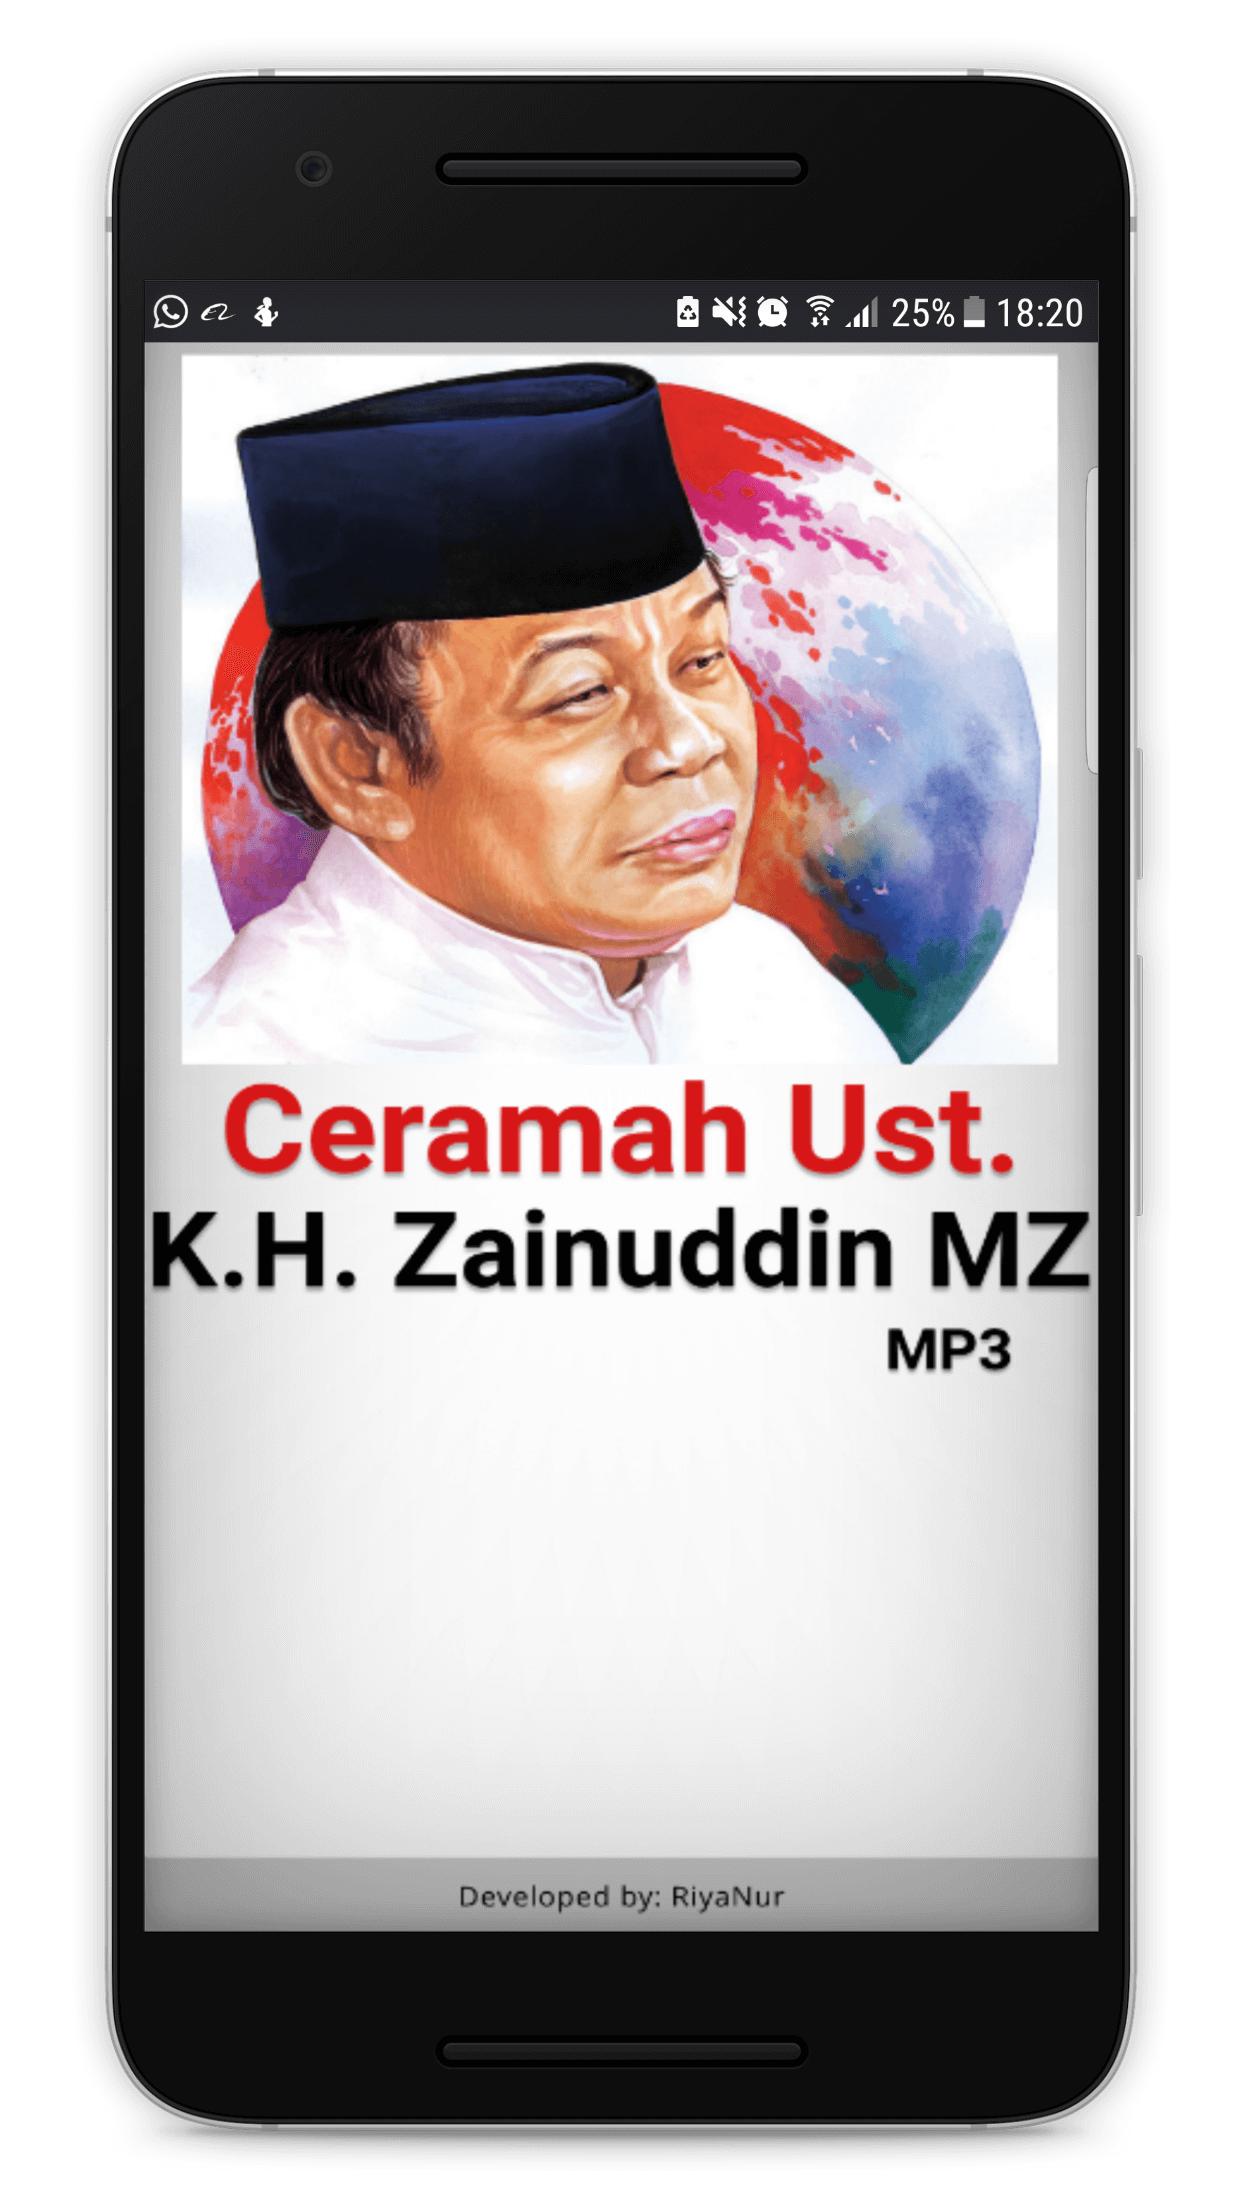 Ceramah Kh Zainuddin Mz Mp3 For Android Apk Download